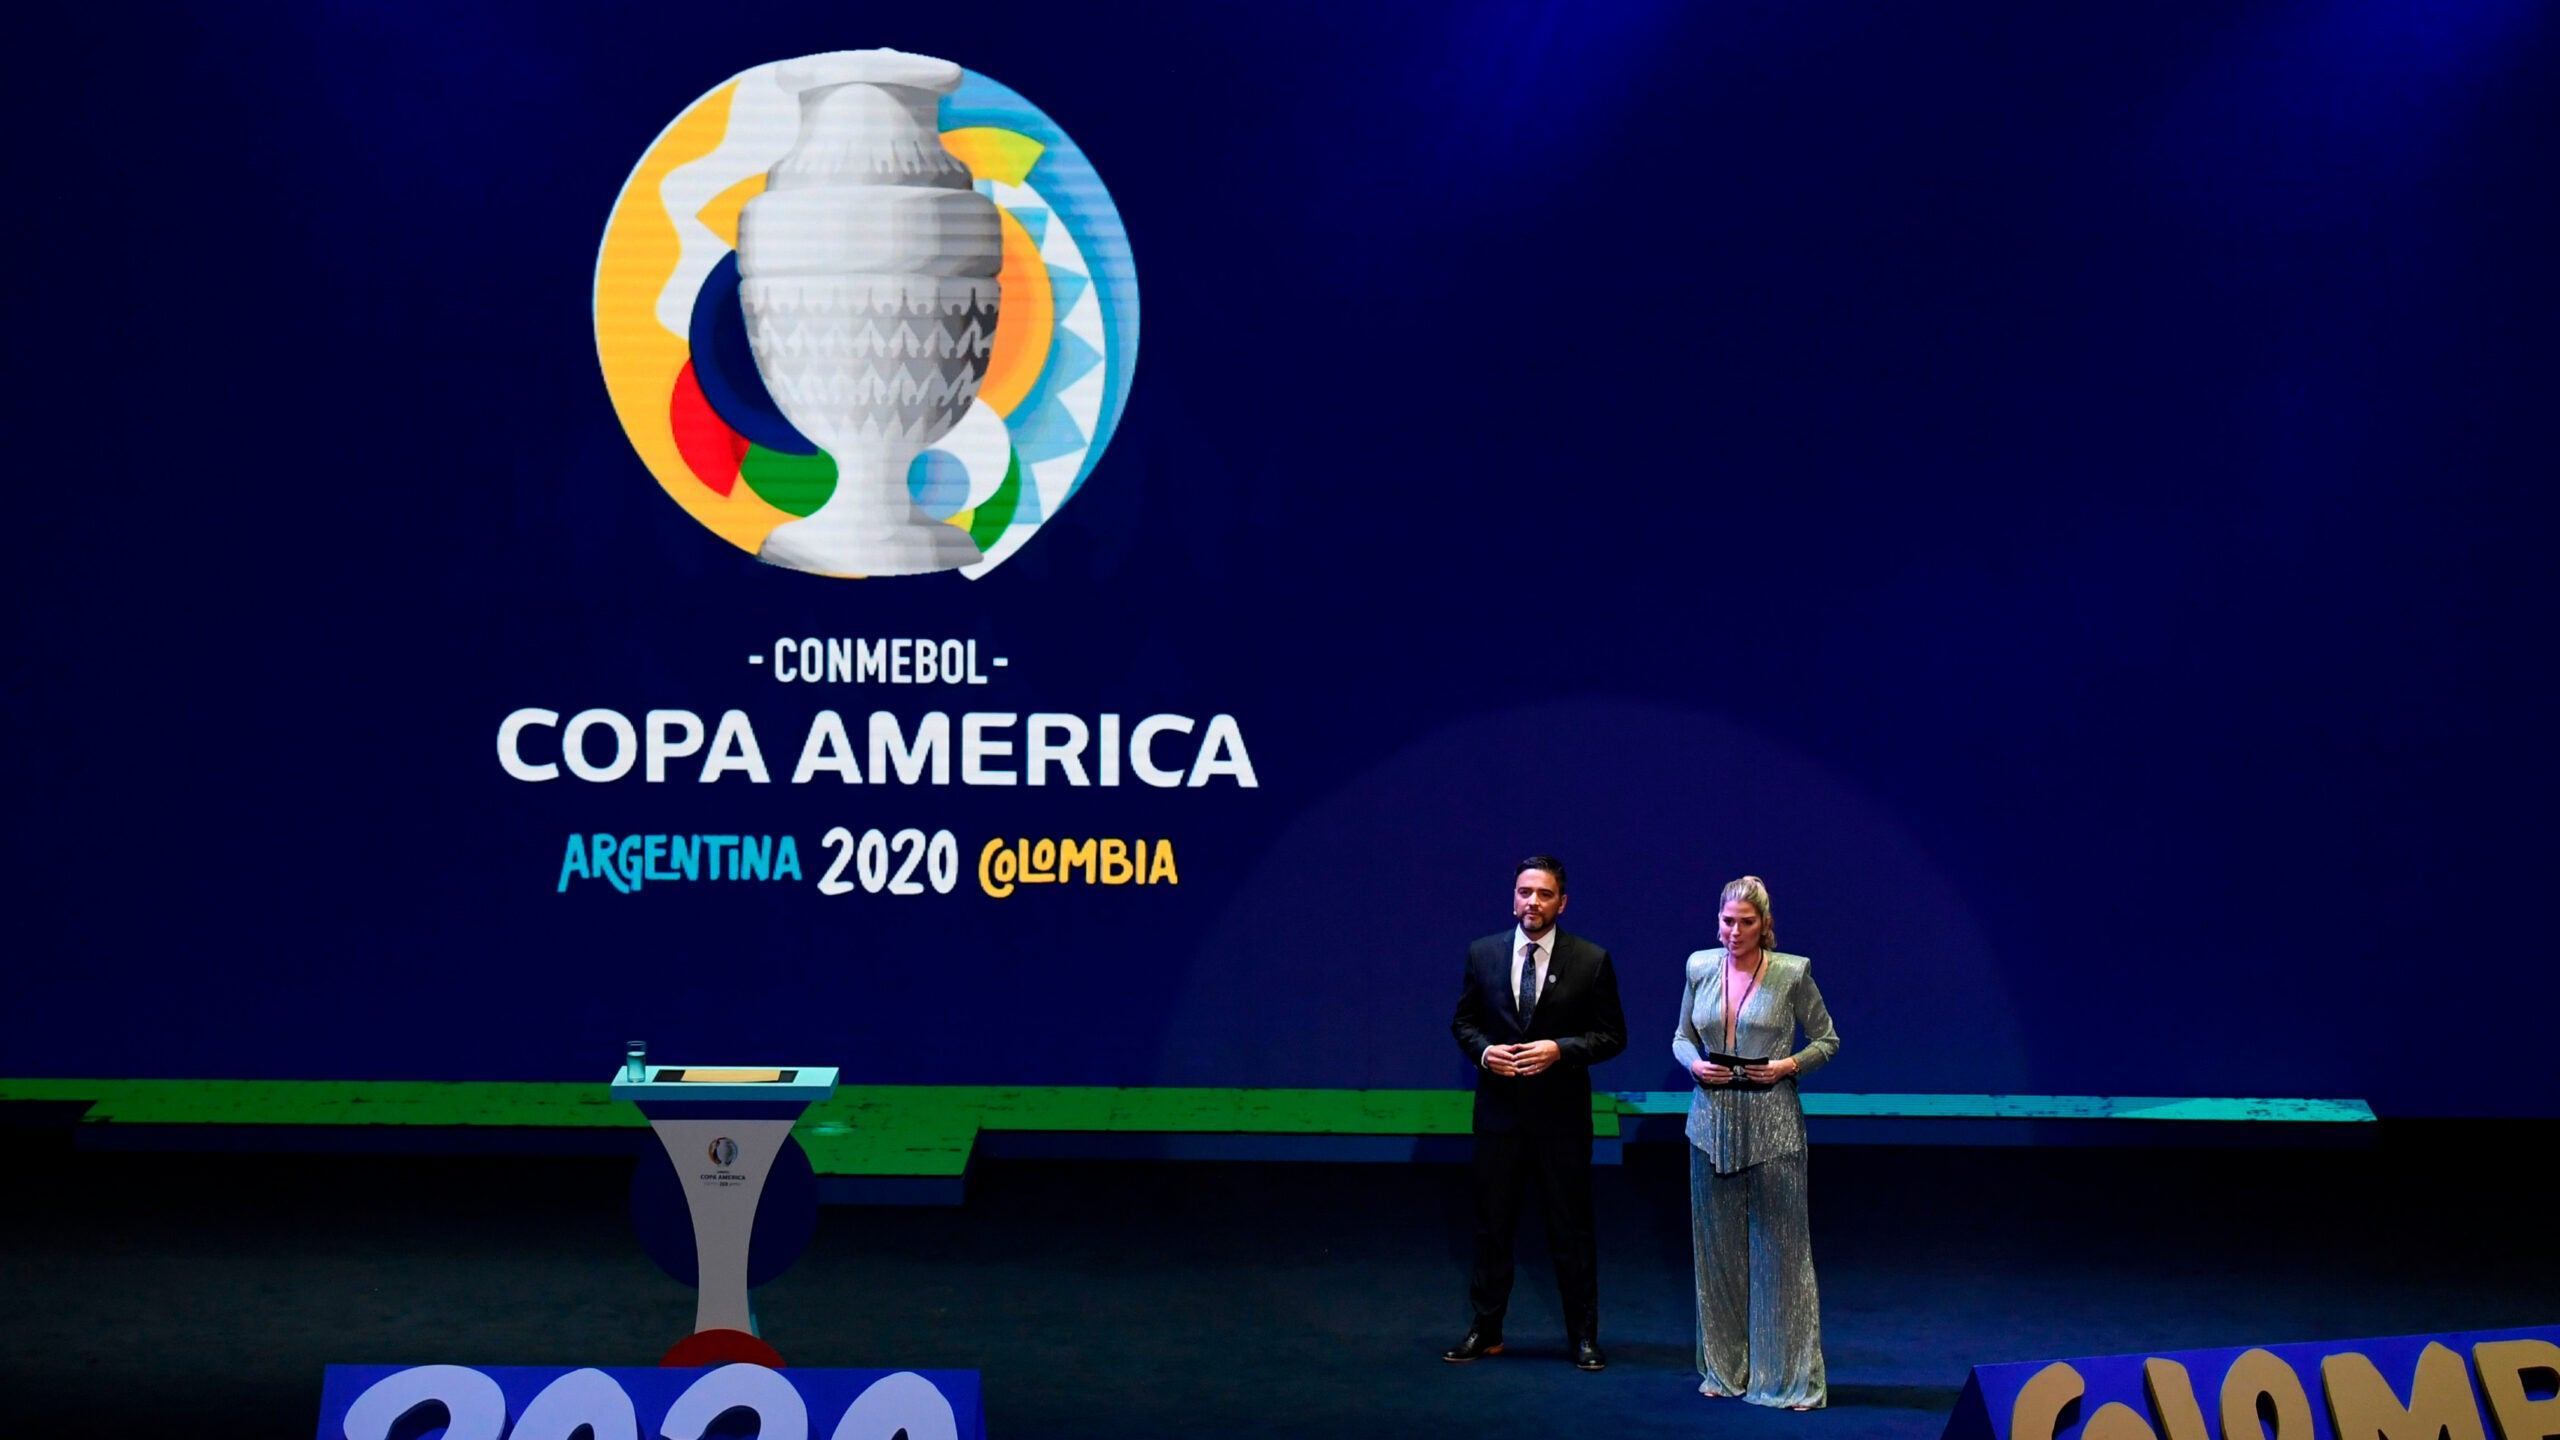 Copa America 2020 Digelar Tahun 2021 di Argentina dan Kolombia